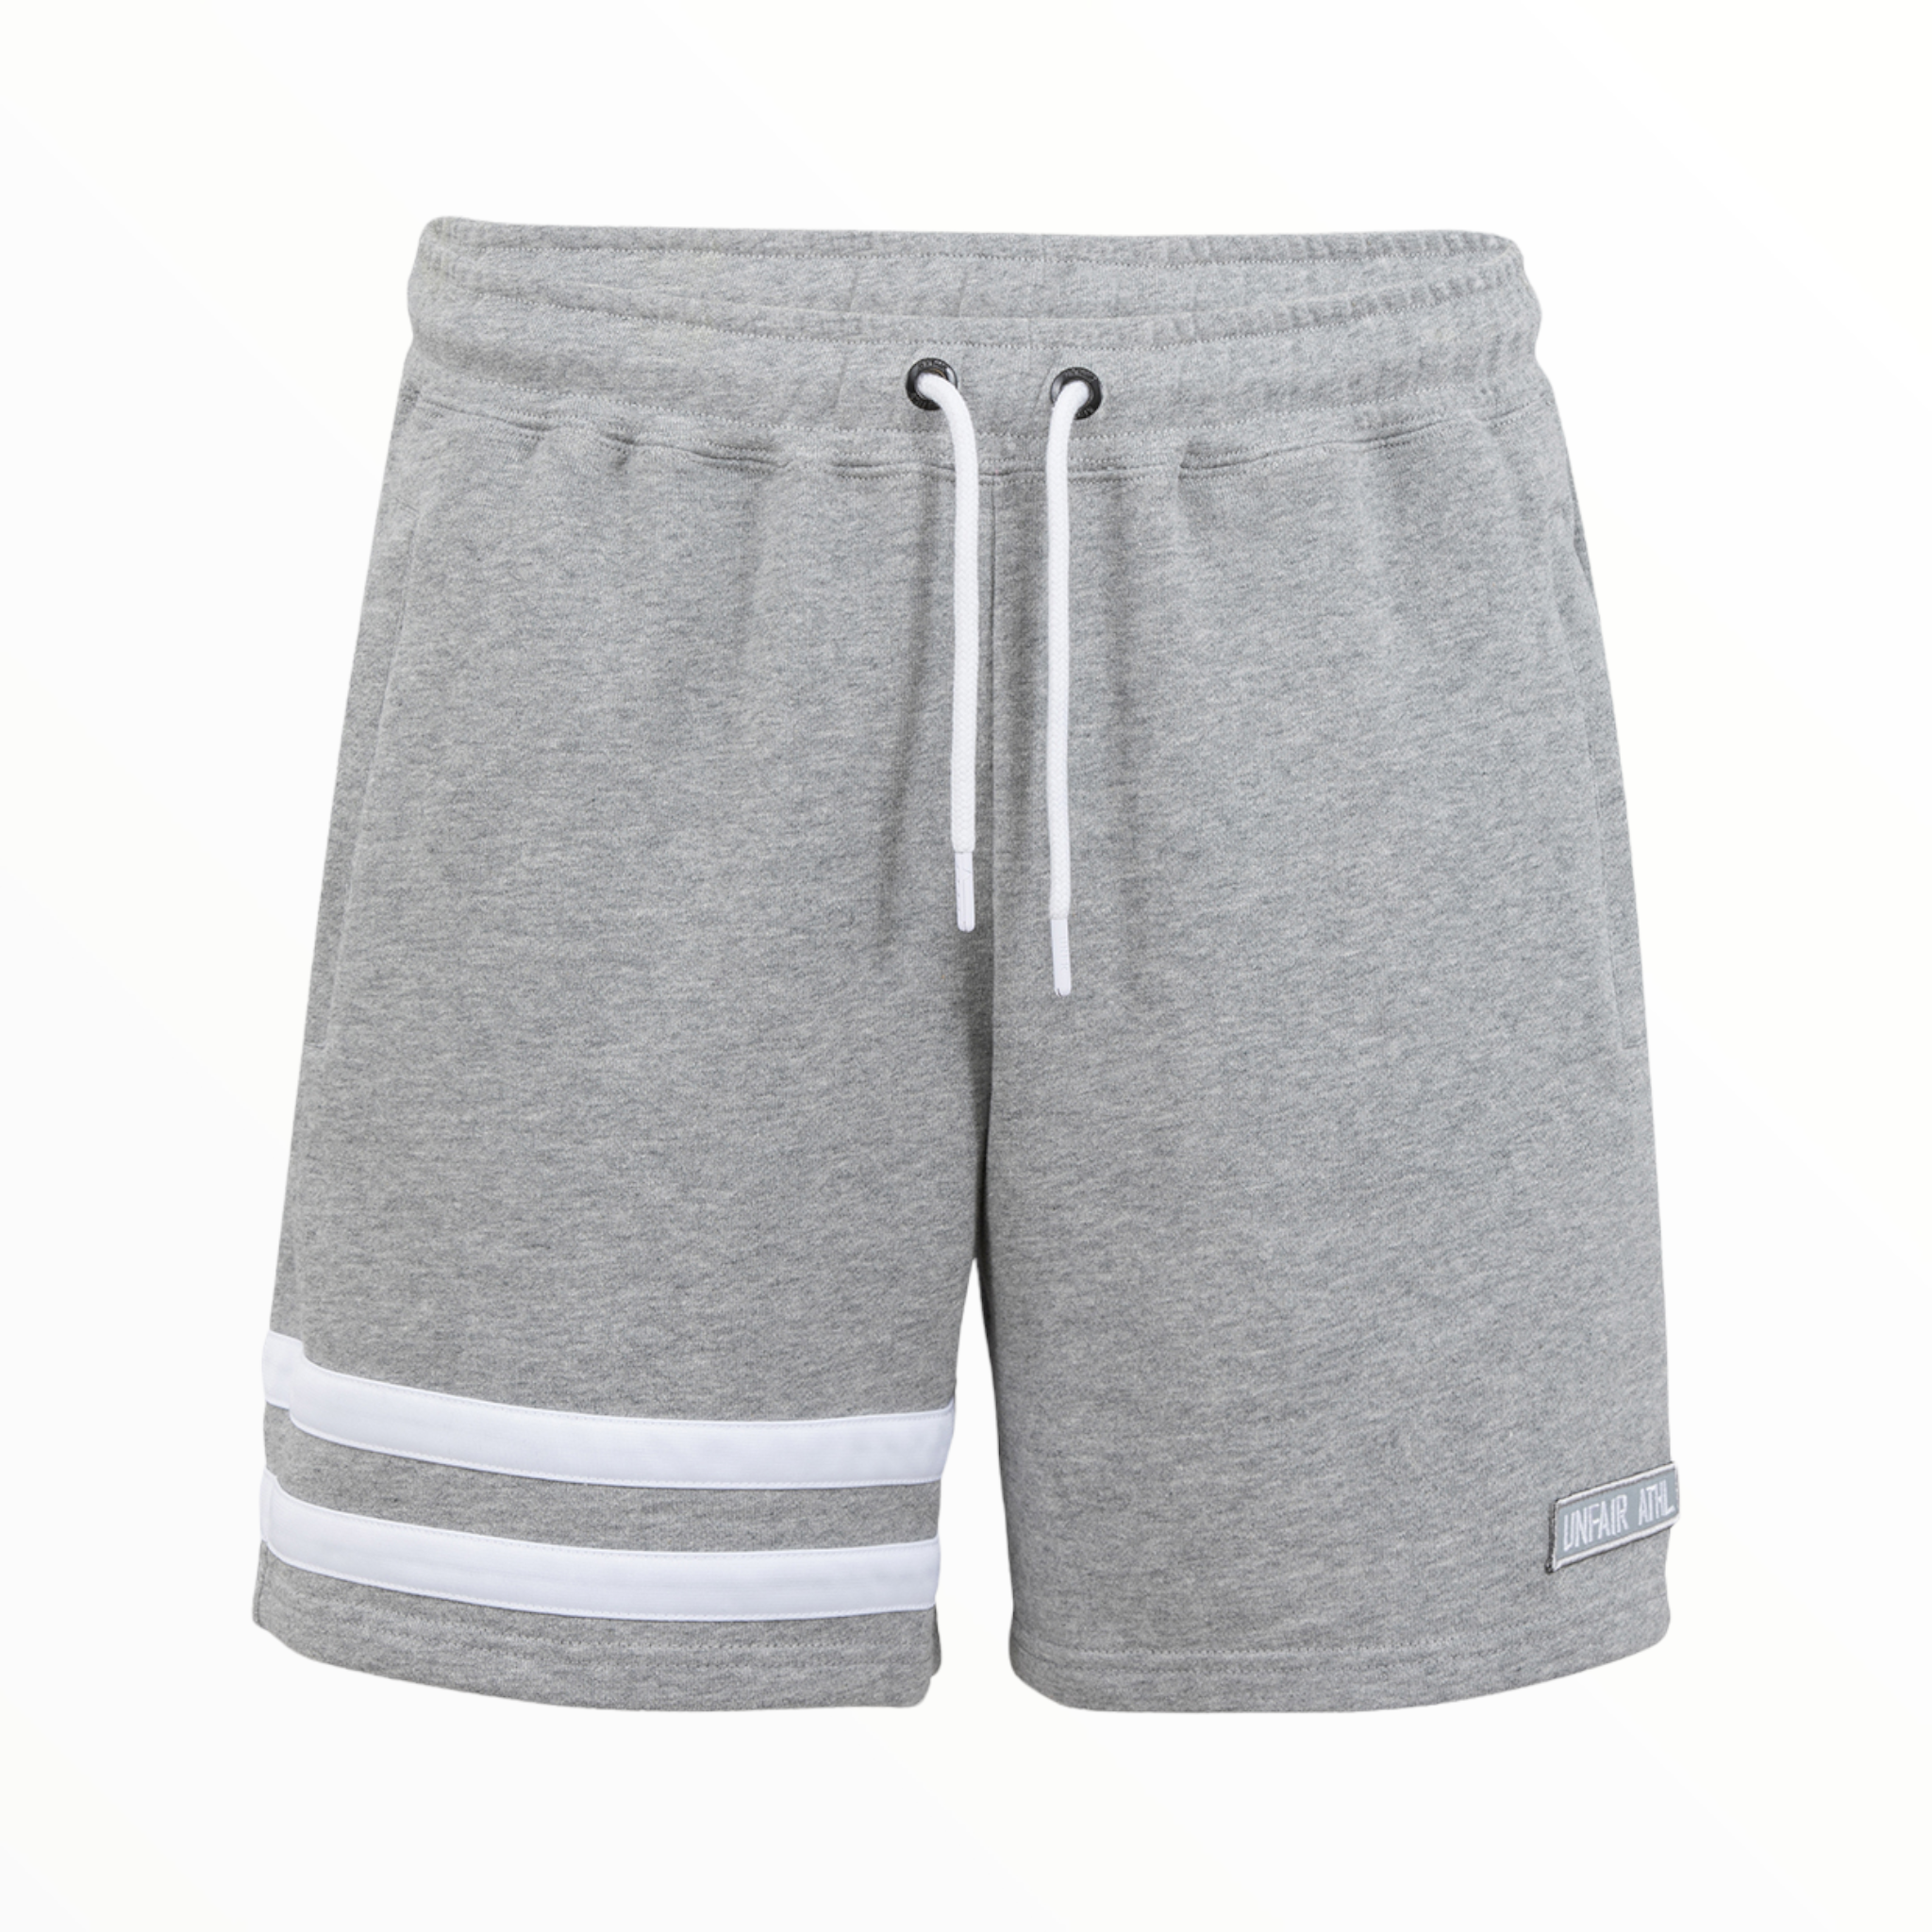 DMWU Cotton Shorts Grey Melange - Unfair Athletics